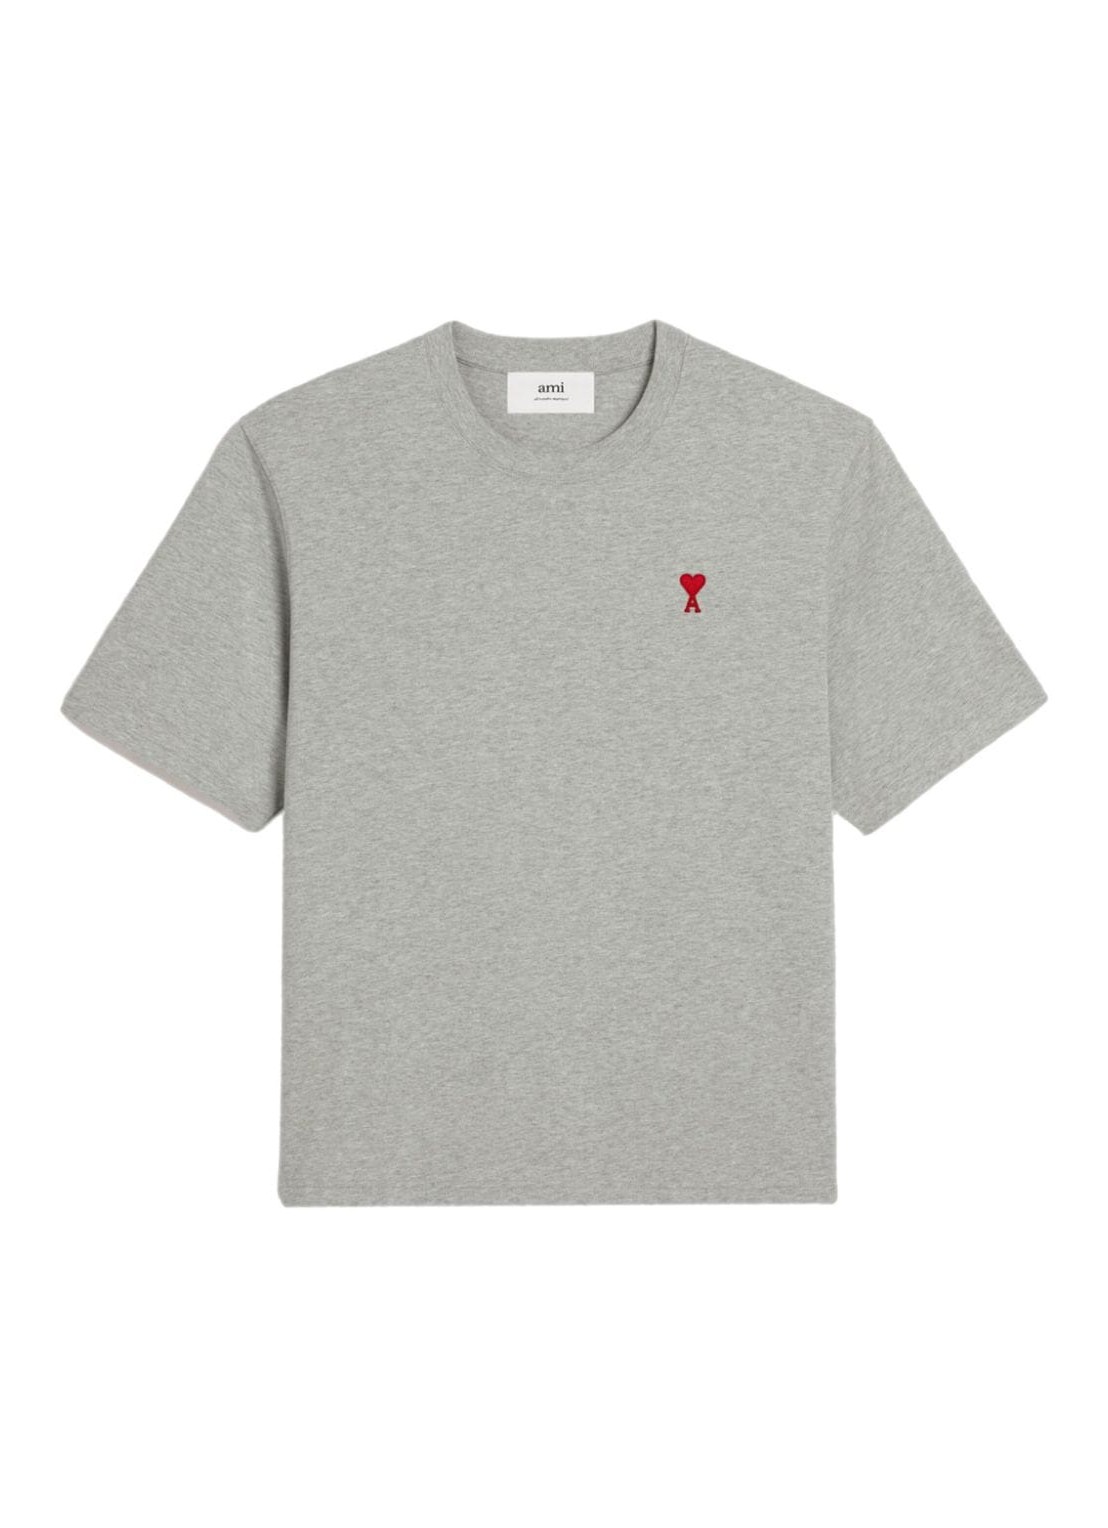 Camiseta ami t-shirt man red ami de coeur tshirt bfuts005726 0951 talla M
 